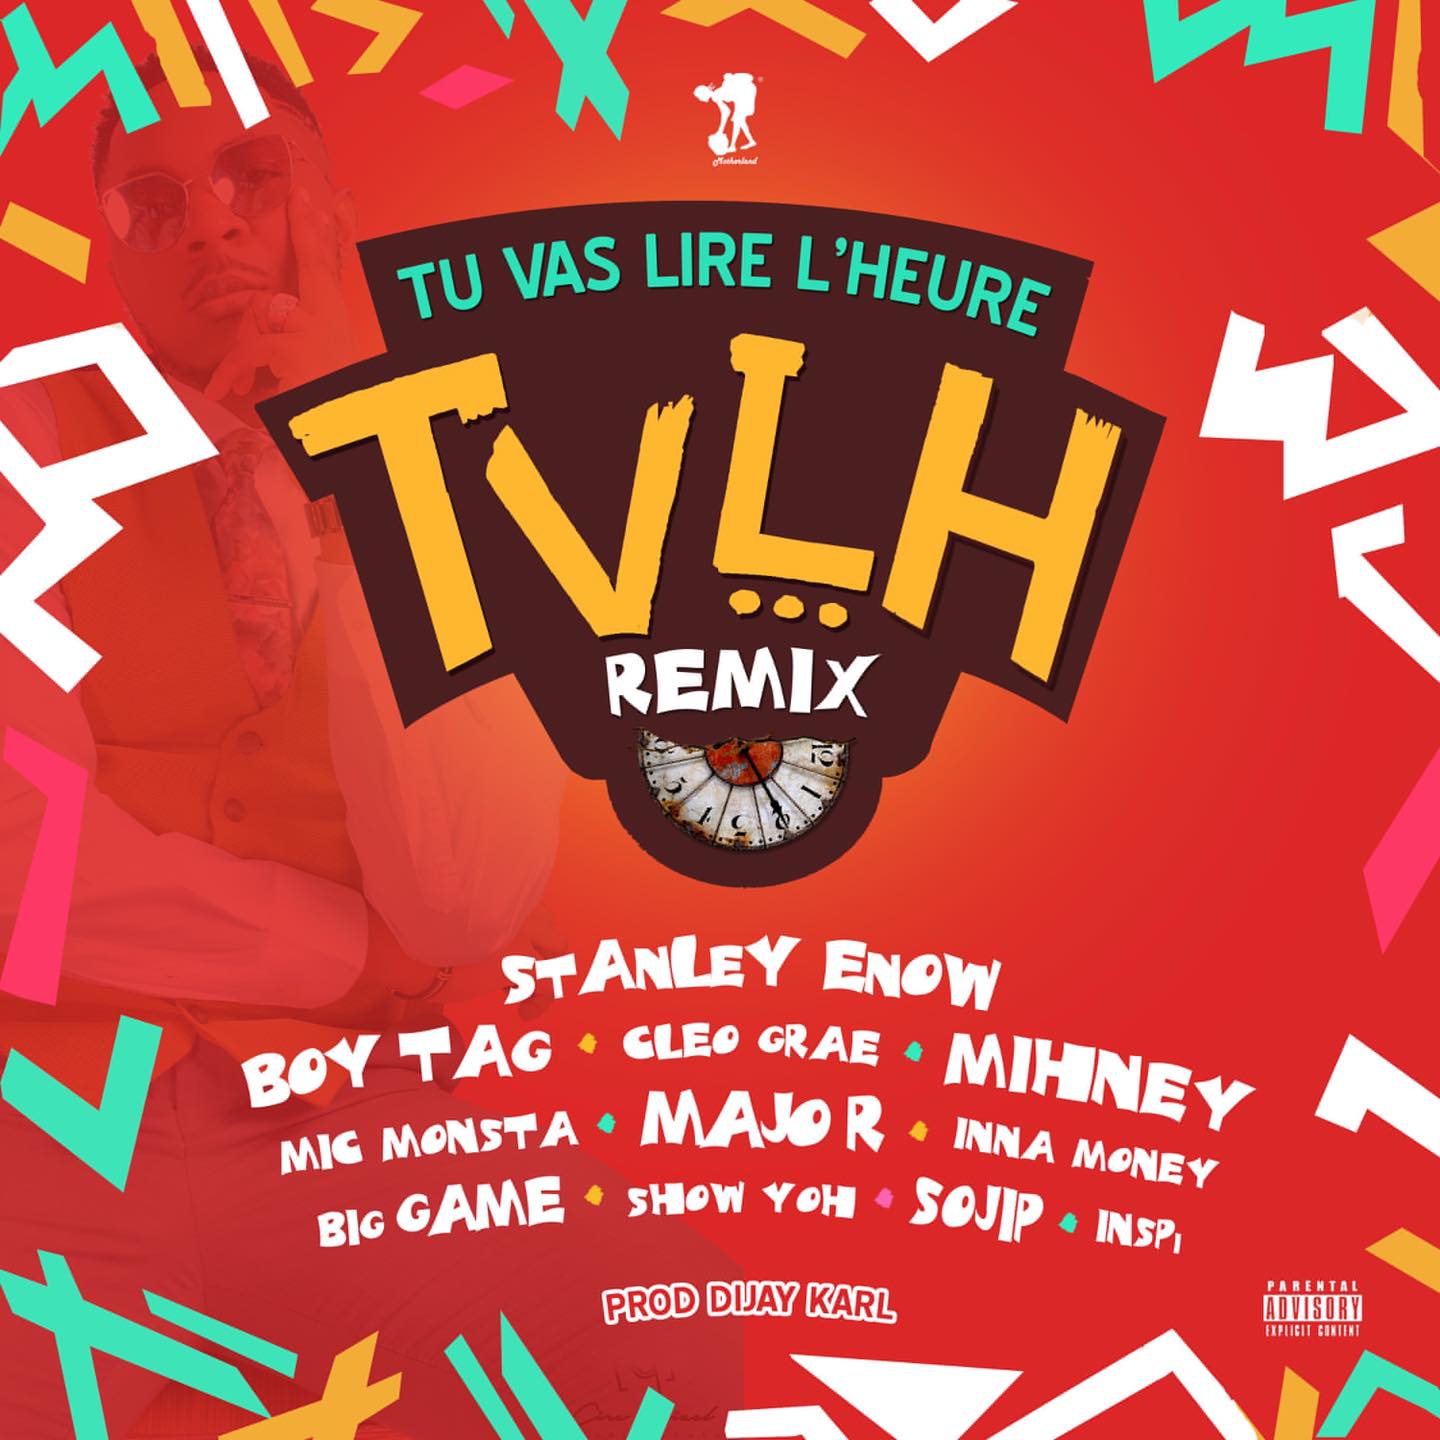 "Tu Va Lire L'Heure (Remix) - Stanley Enow, Boy Tag, Cleo Grae, Mic Monsta, Mihney, Big Game, Inna Money, Sojip, Show Yoh, Inspi